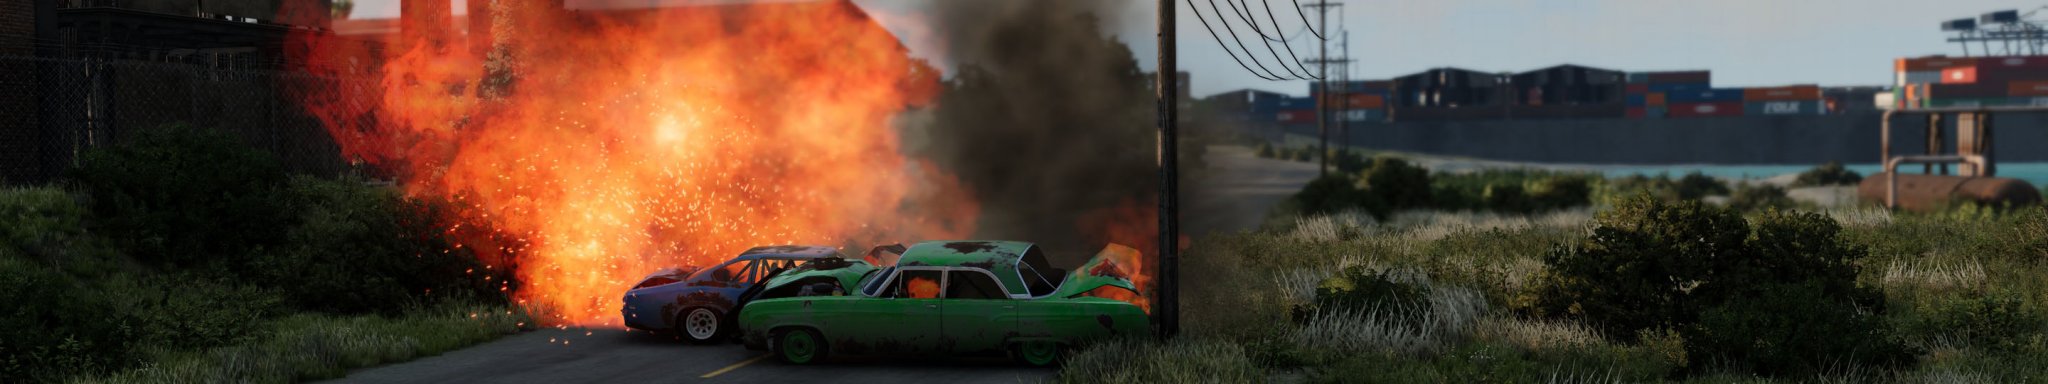 2 BeamNG 2 CAR FIRE EXPLOSIONS copy.jpg